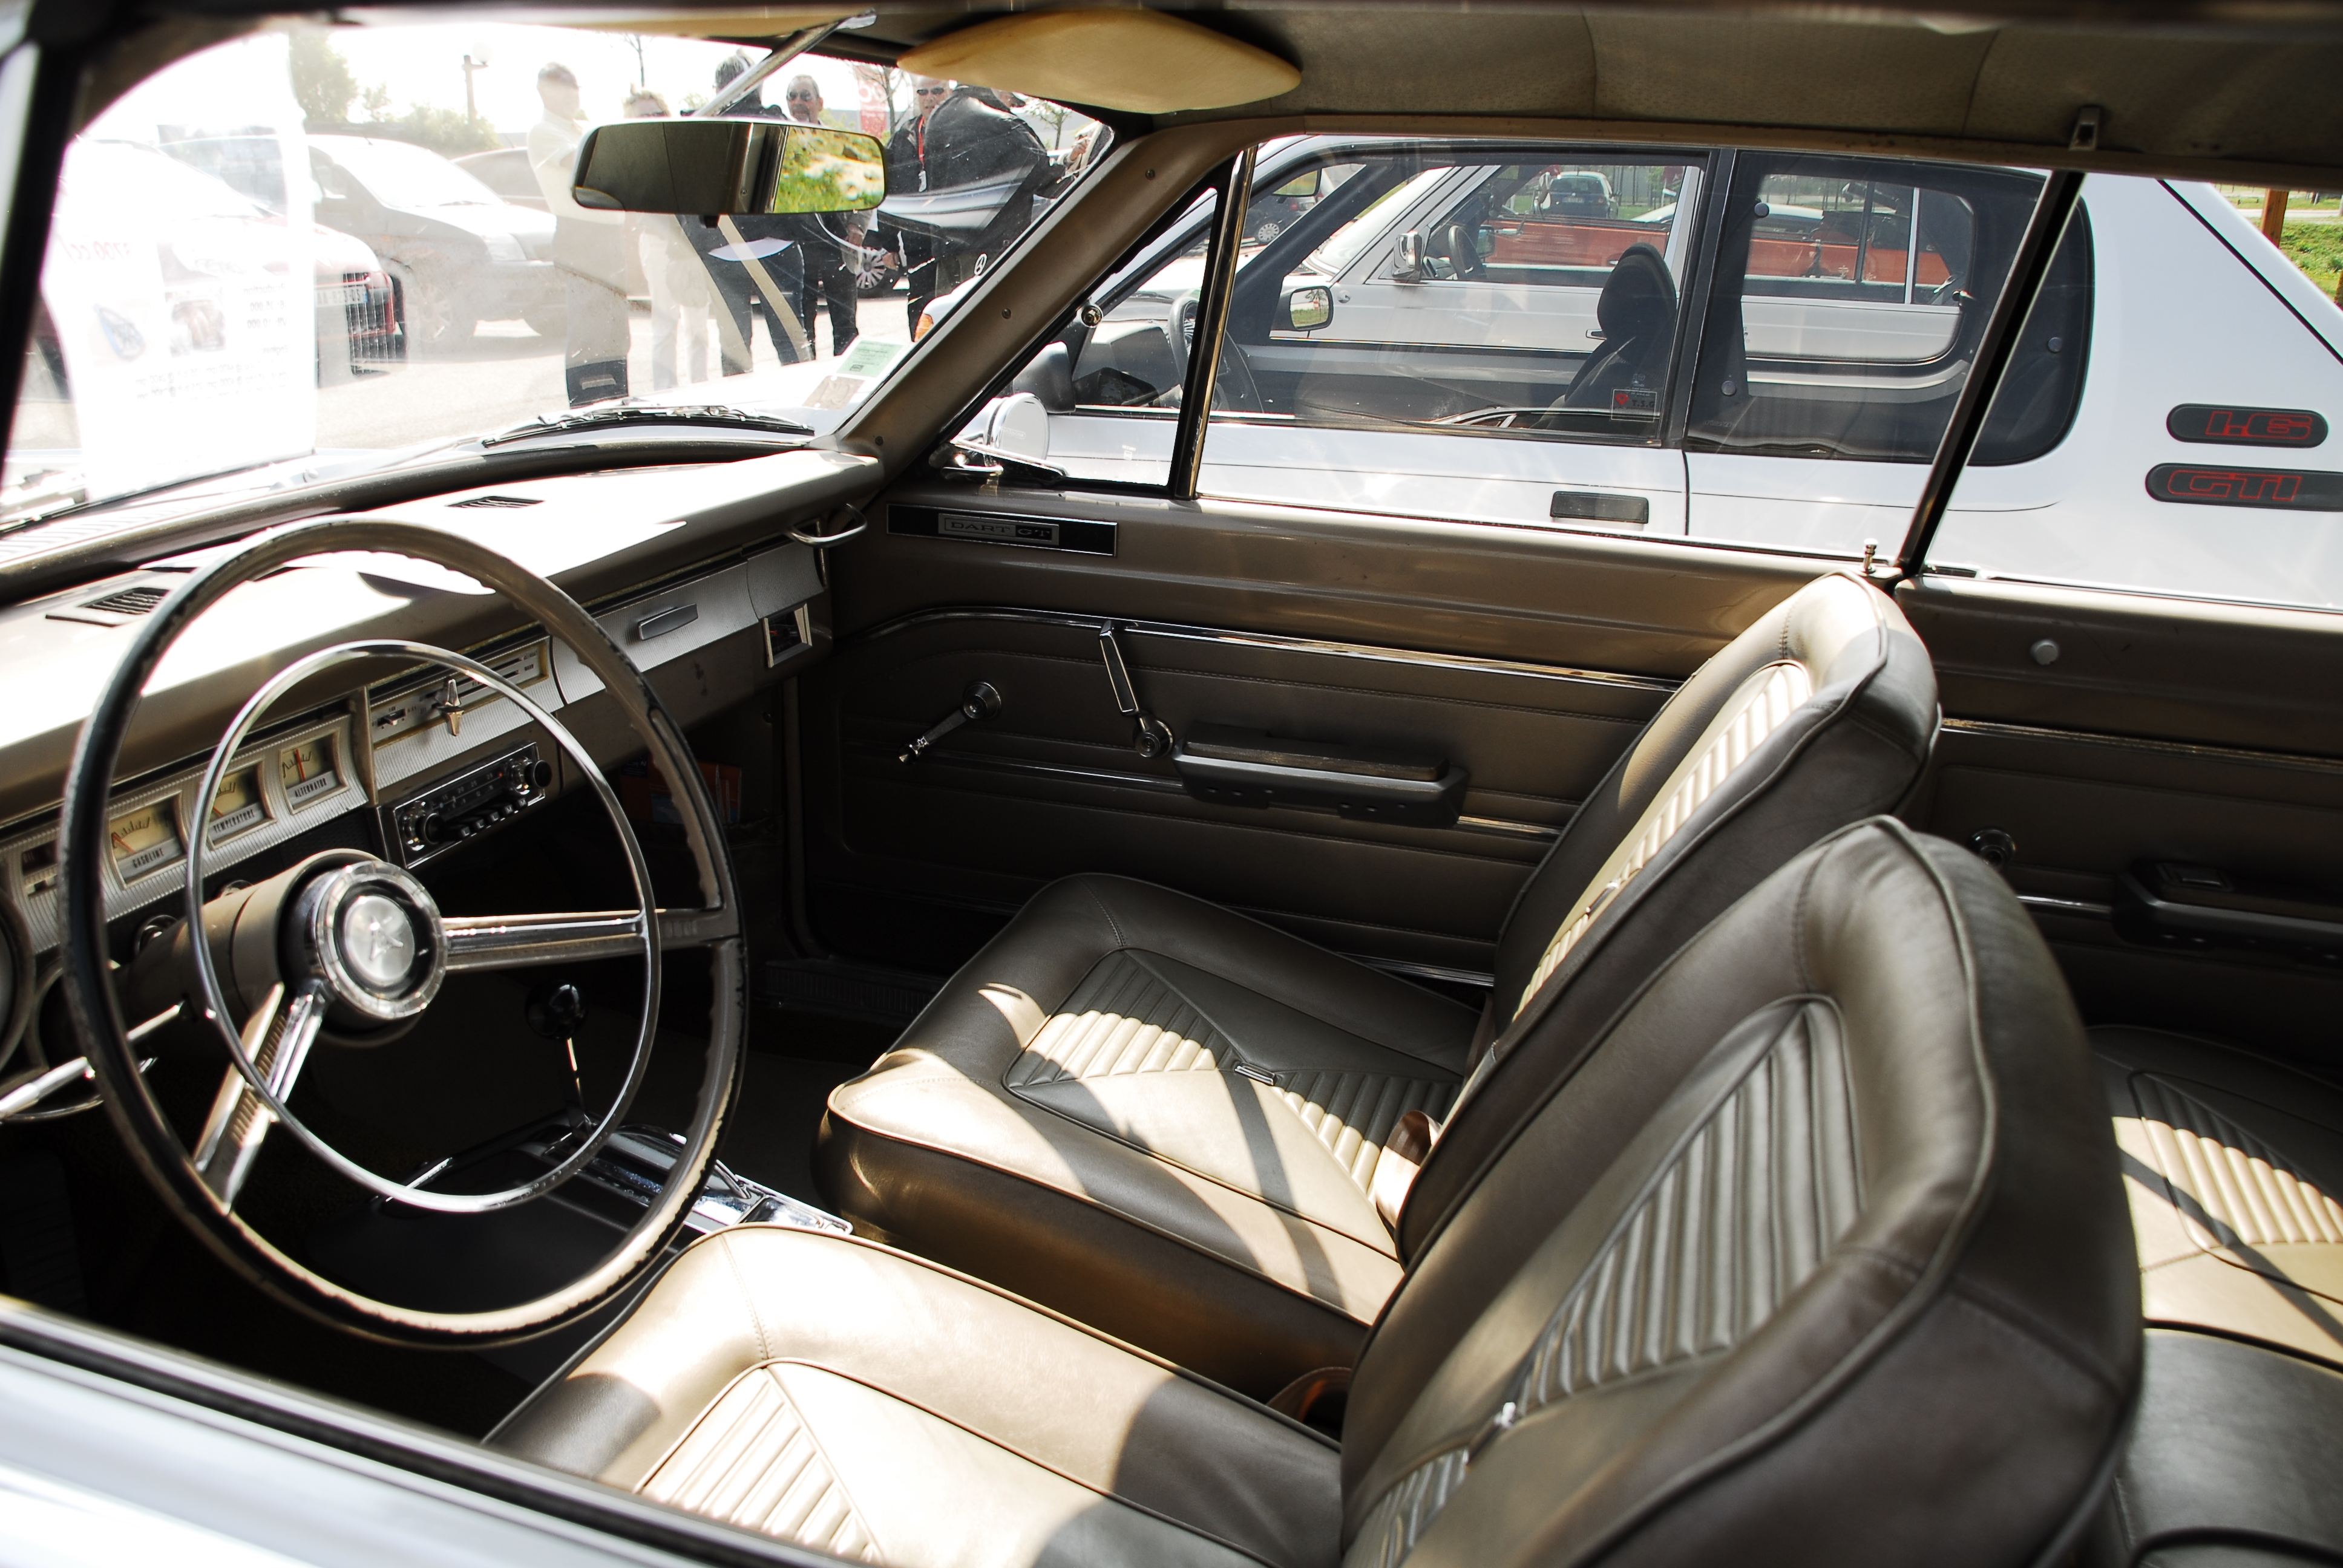 1965 dodge dart GT coupe hardtop | Flickr - Photo Sharing!